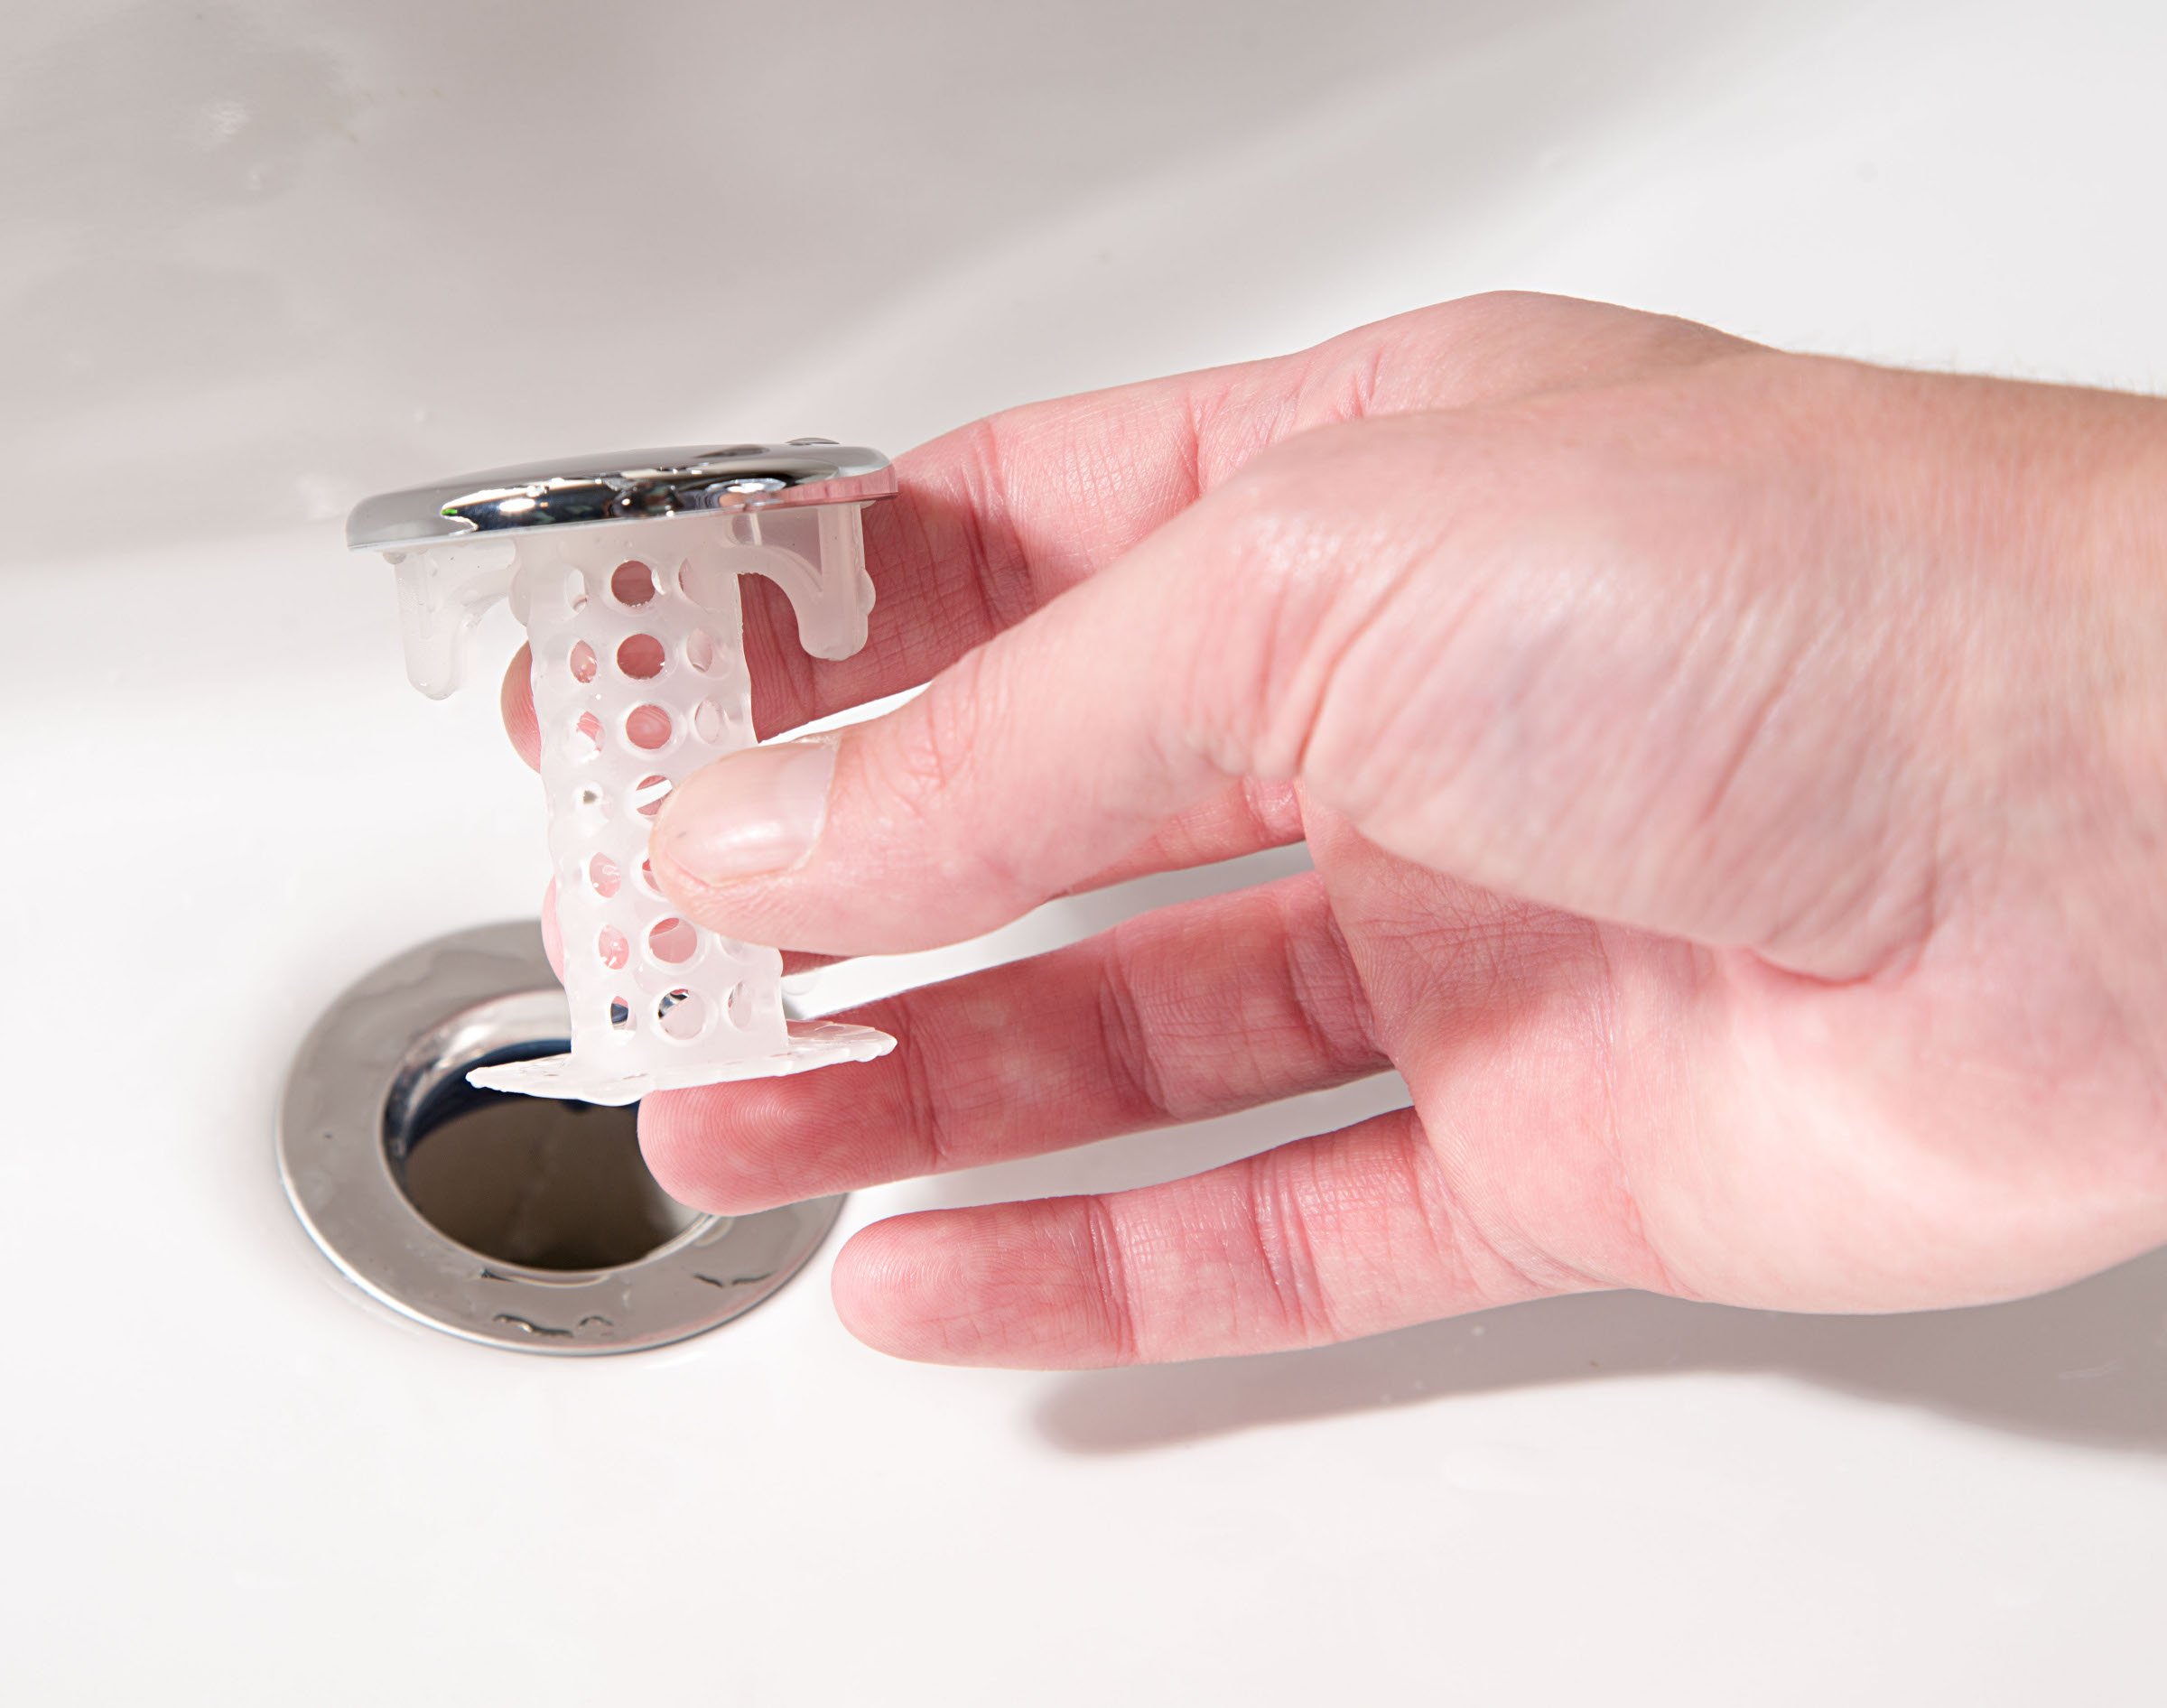 TubShroom and SinkShroom Drain Protectors Hair Catchers for Bathtubs and Sinks, Chrome